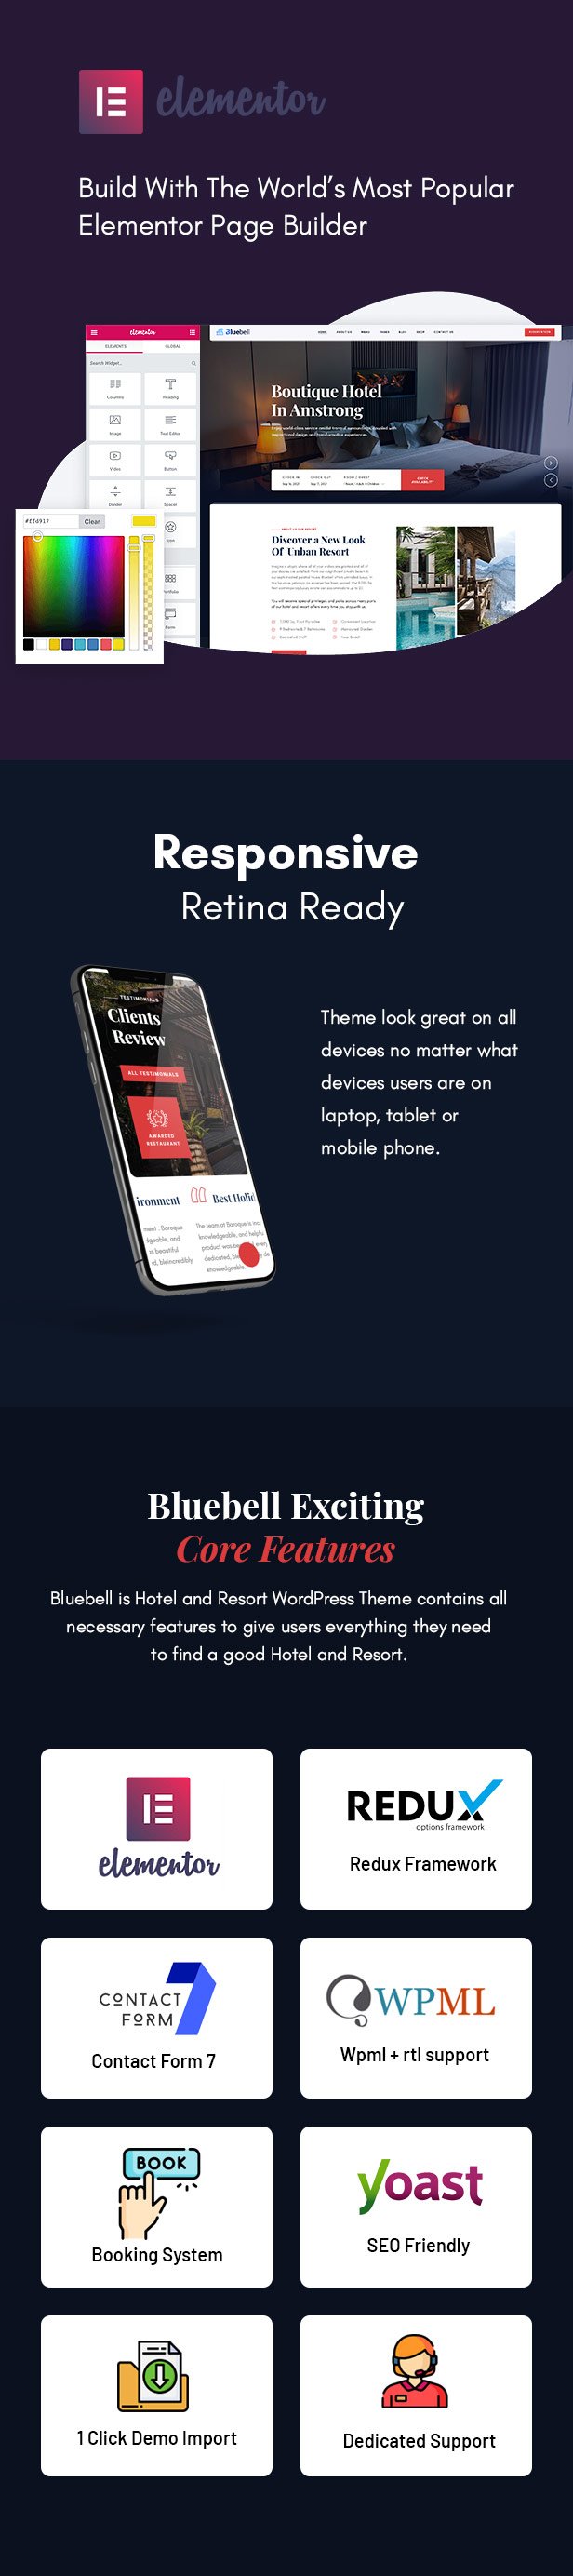 Bluebell - Hotel & Resort WordPress Theme - 2